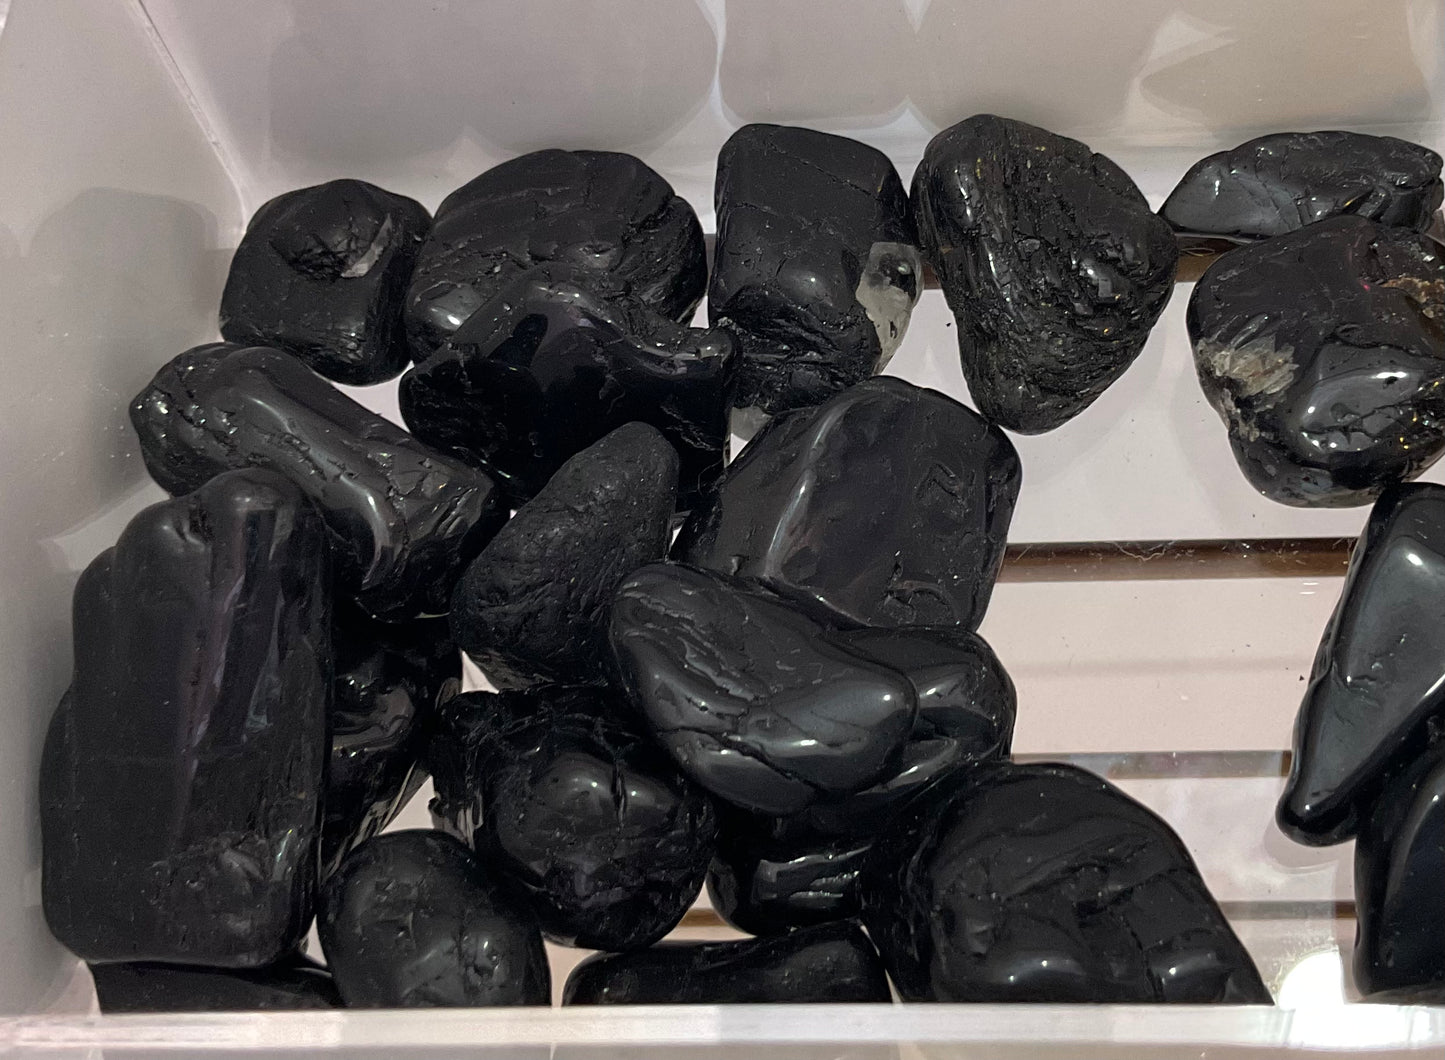 Black Tourmaline tumble stone